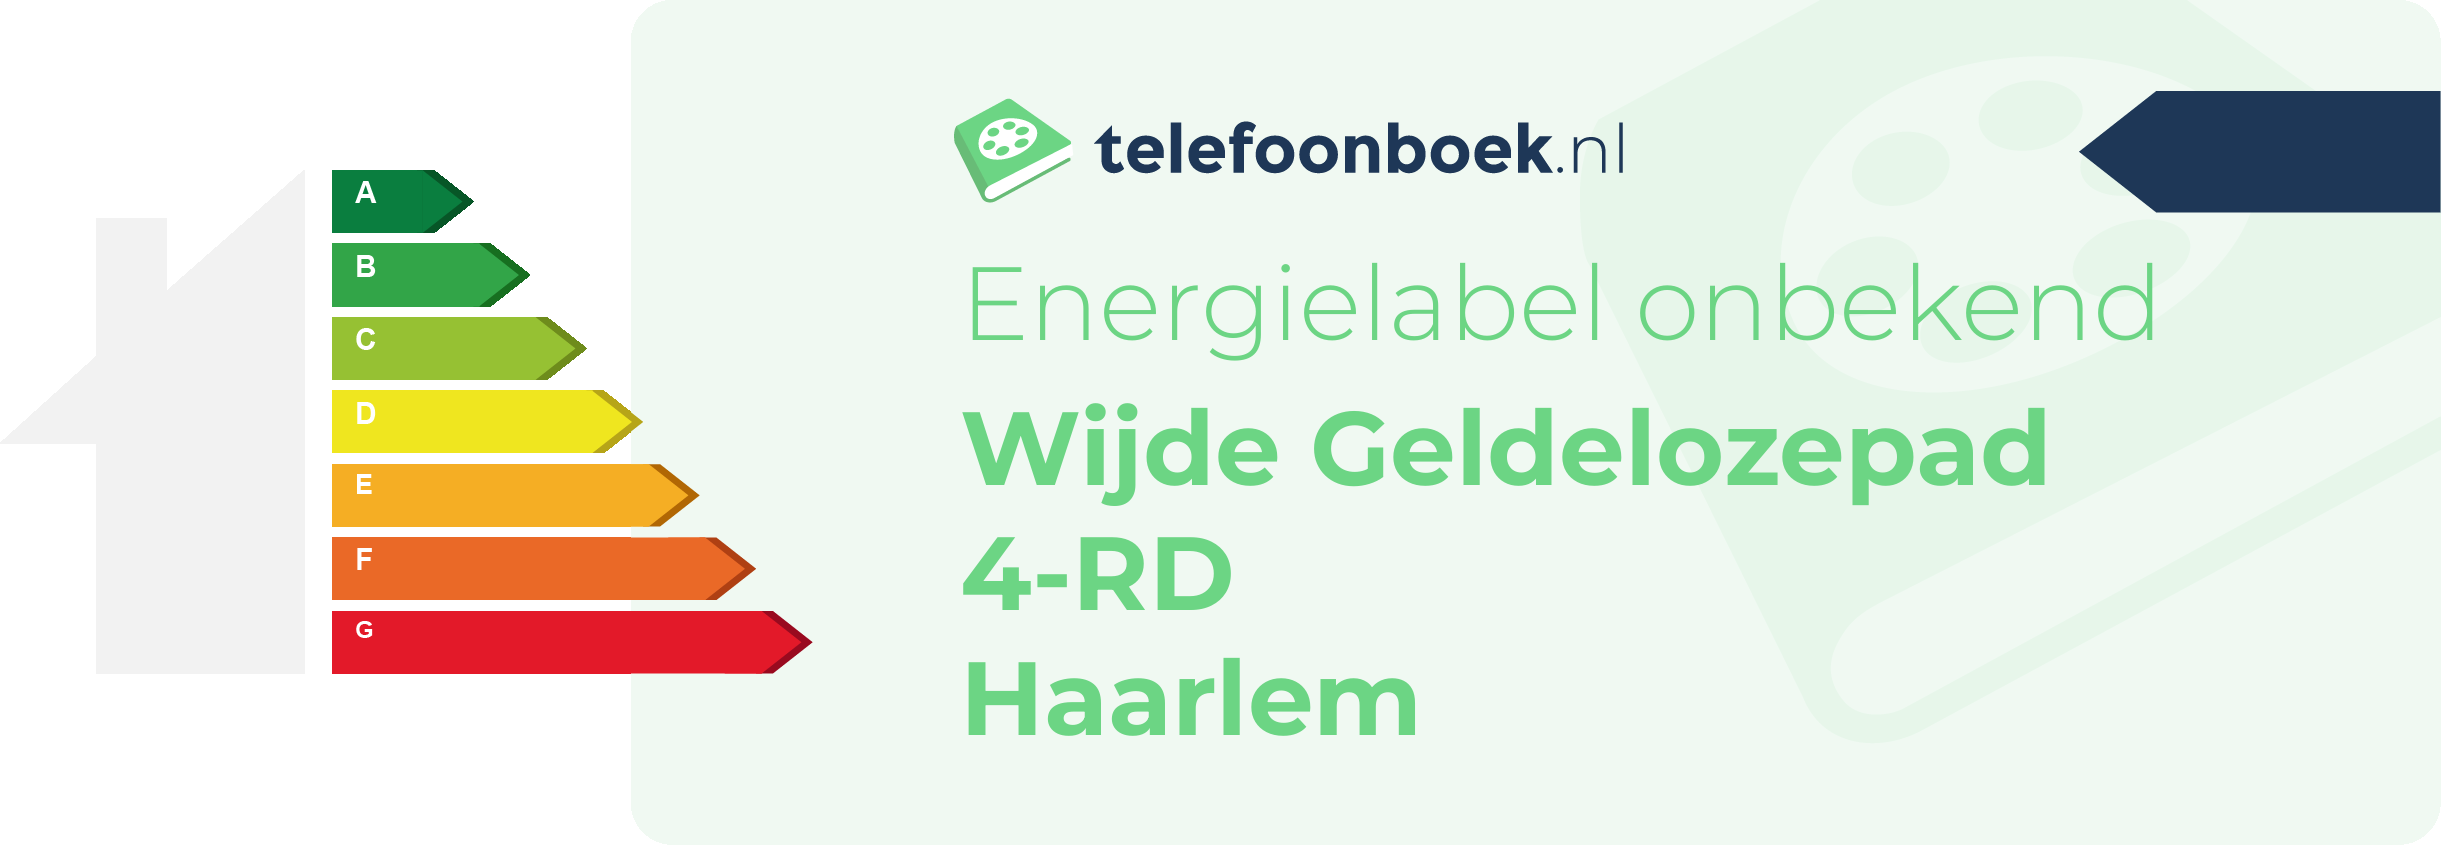 Energielabel Wijde Geldelozepad 4-RD Haarlem